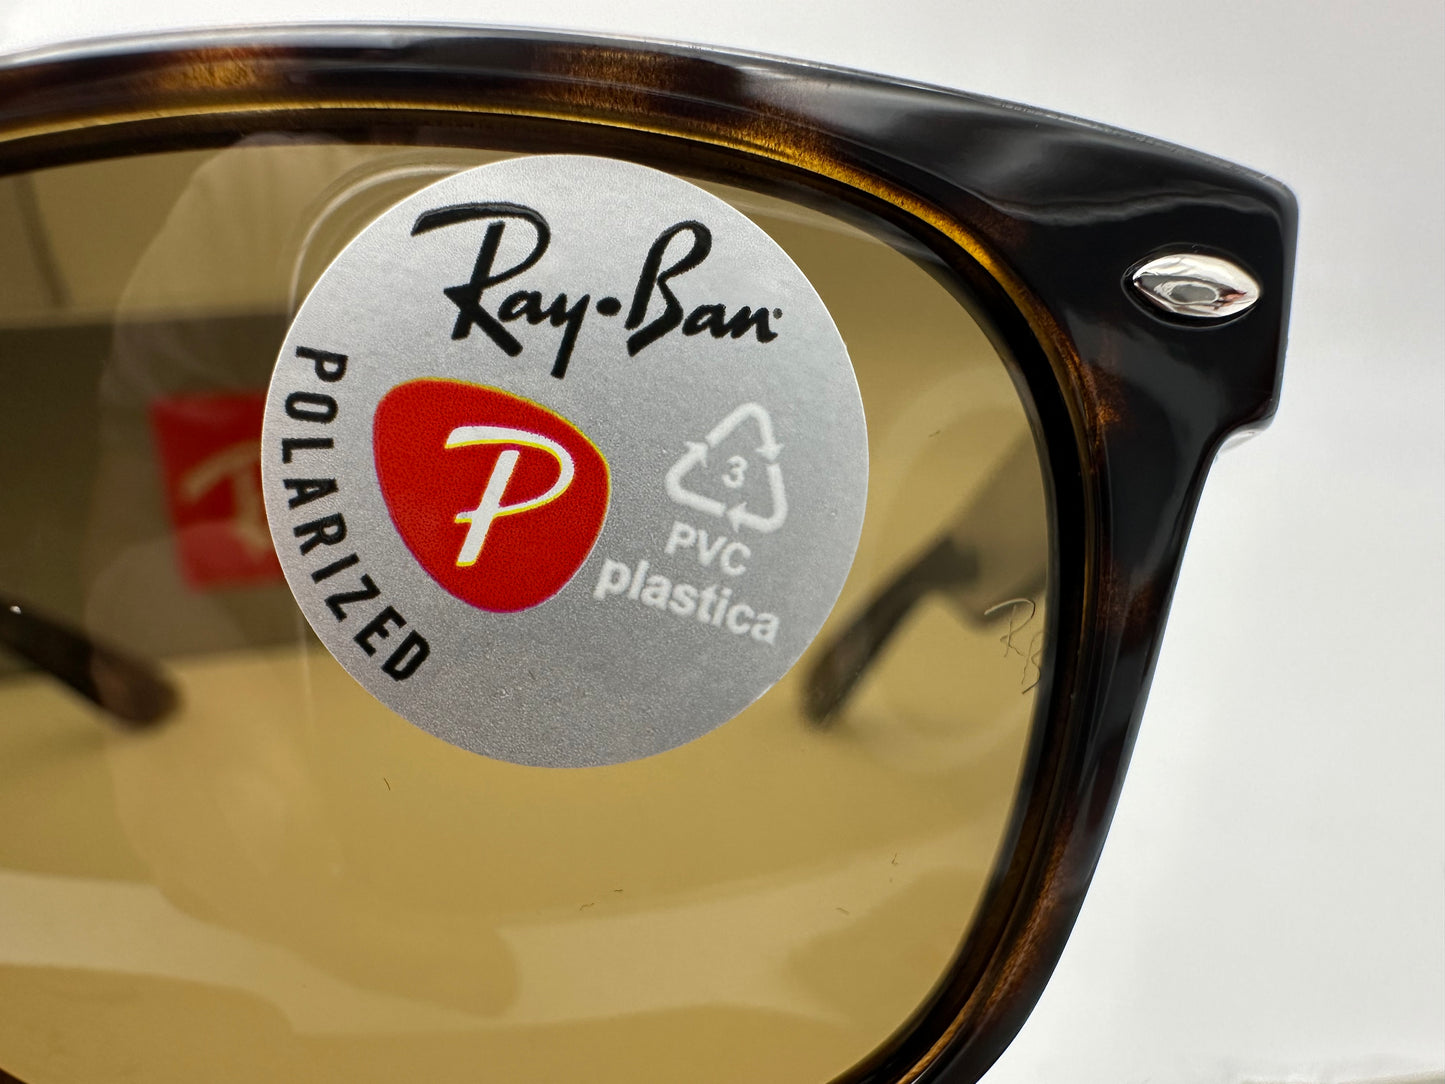 Ray-Ban New Wayfarer 55mm Tortoise B-15 Brown Polarized Sunglasses RB2132 902/57 NEW